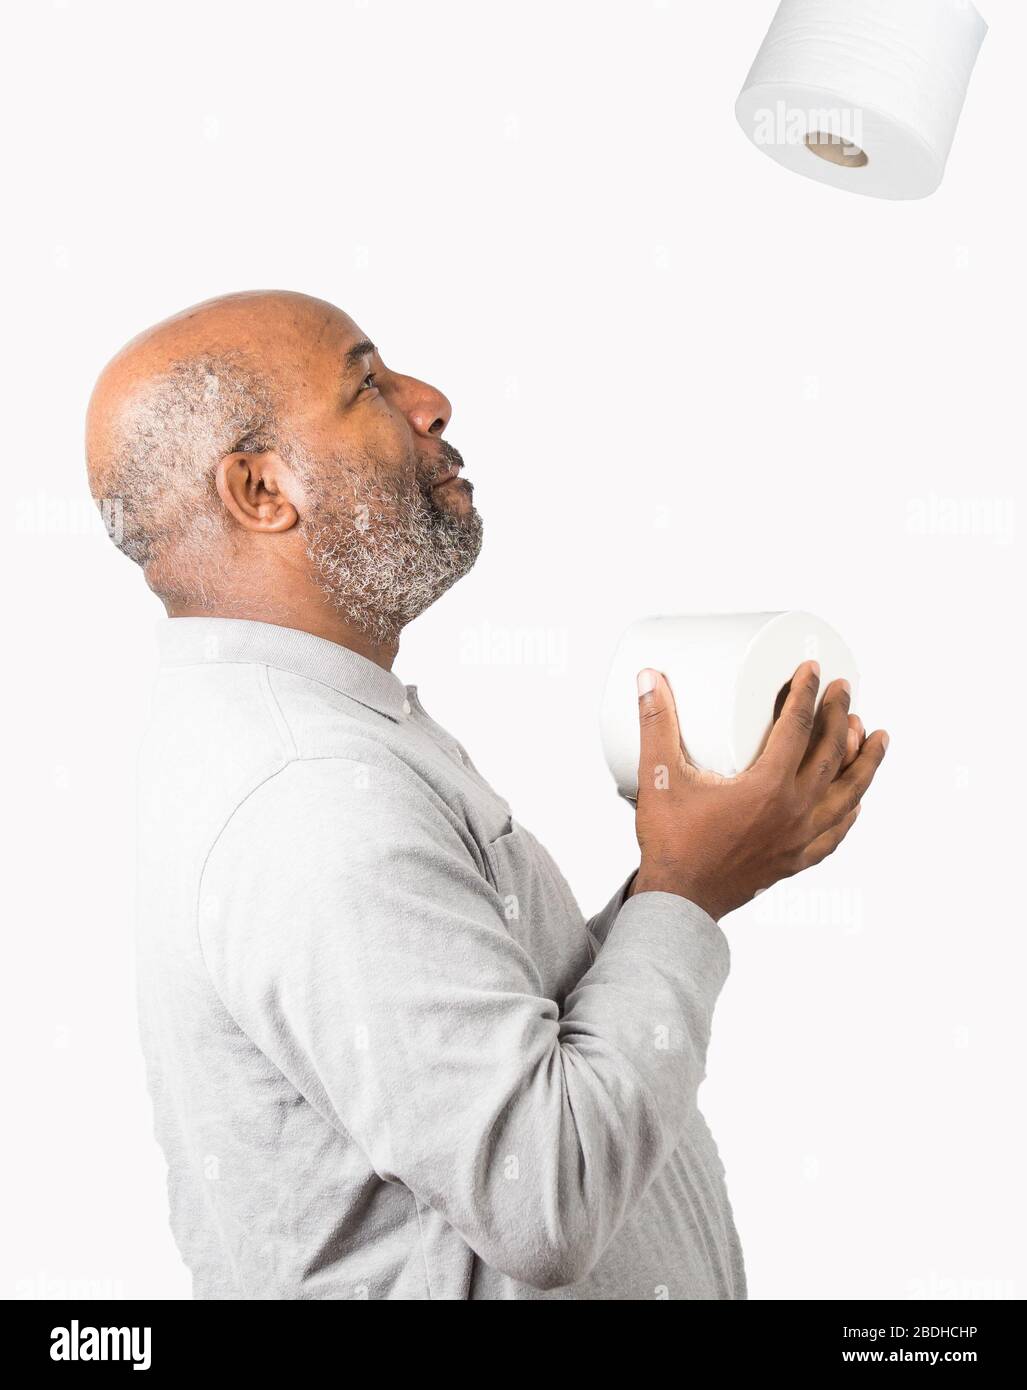 African American man with toilet paper during Corona Virus crisis. Dark Humor Stock Photo